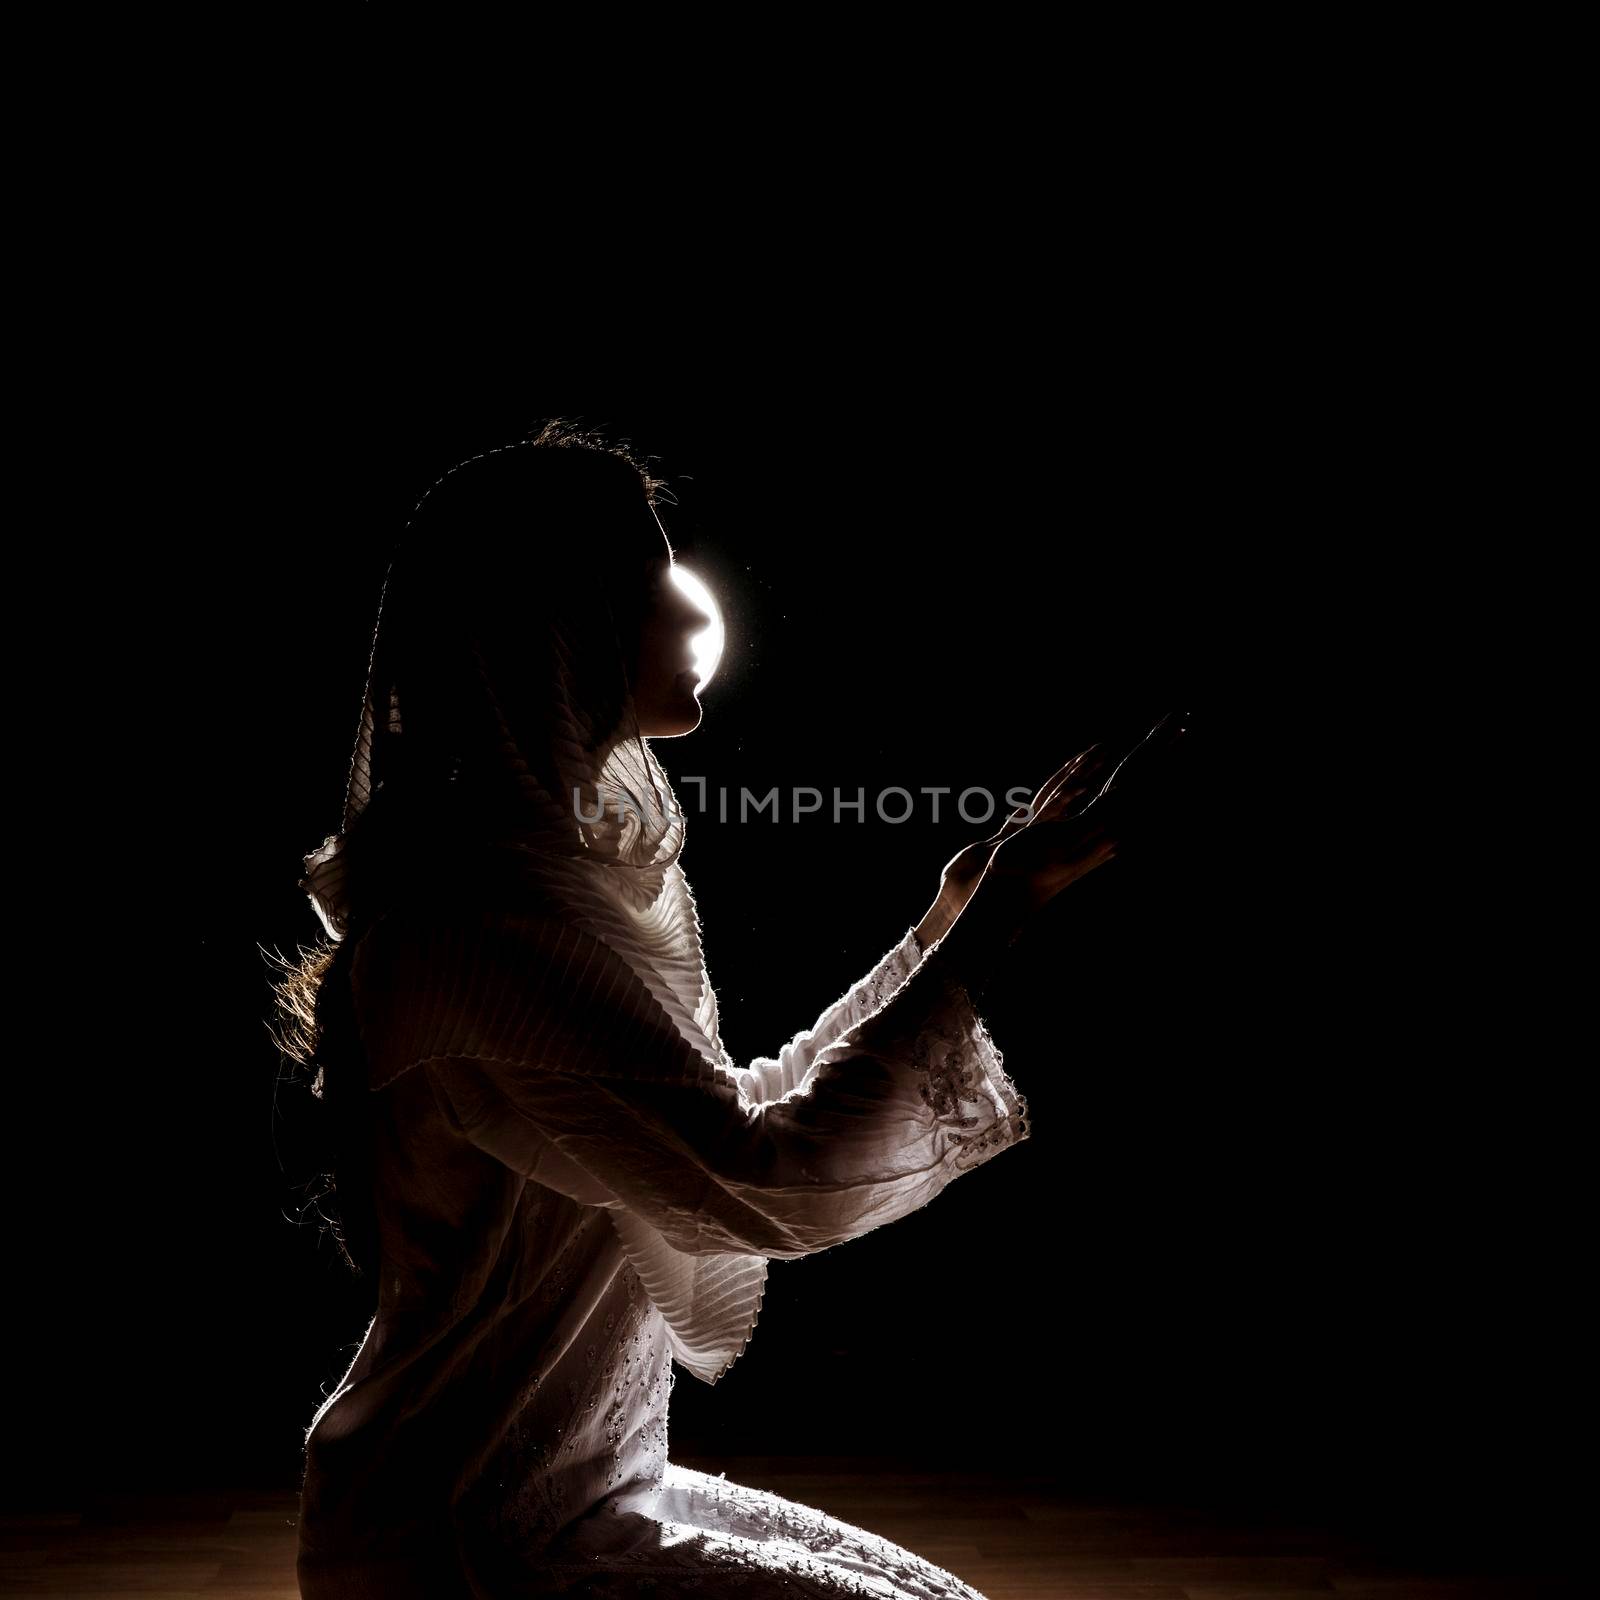 silhouette muslim woman praying. High quality photo by Zahard